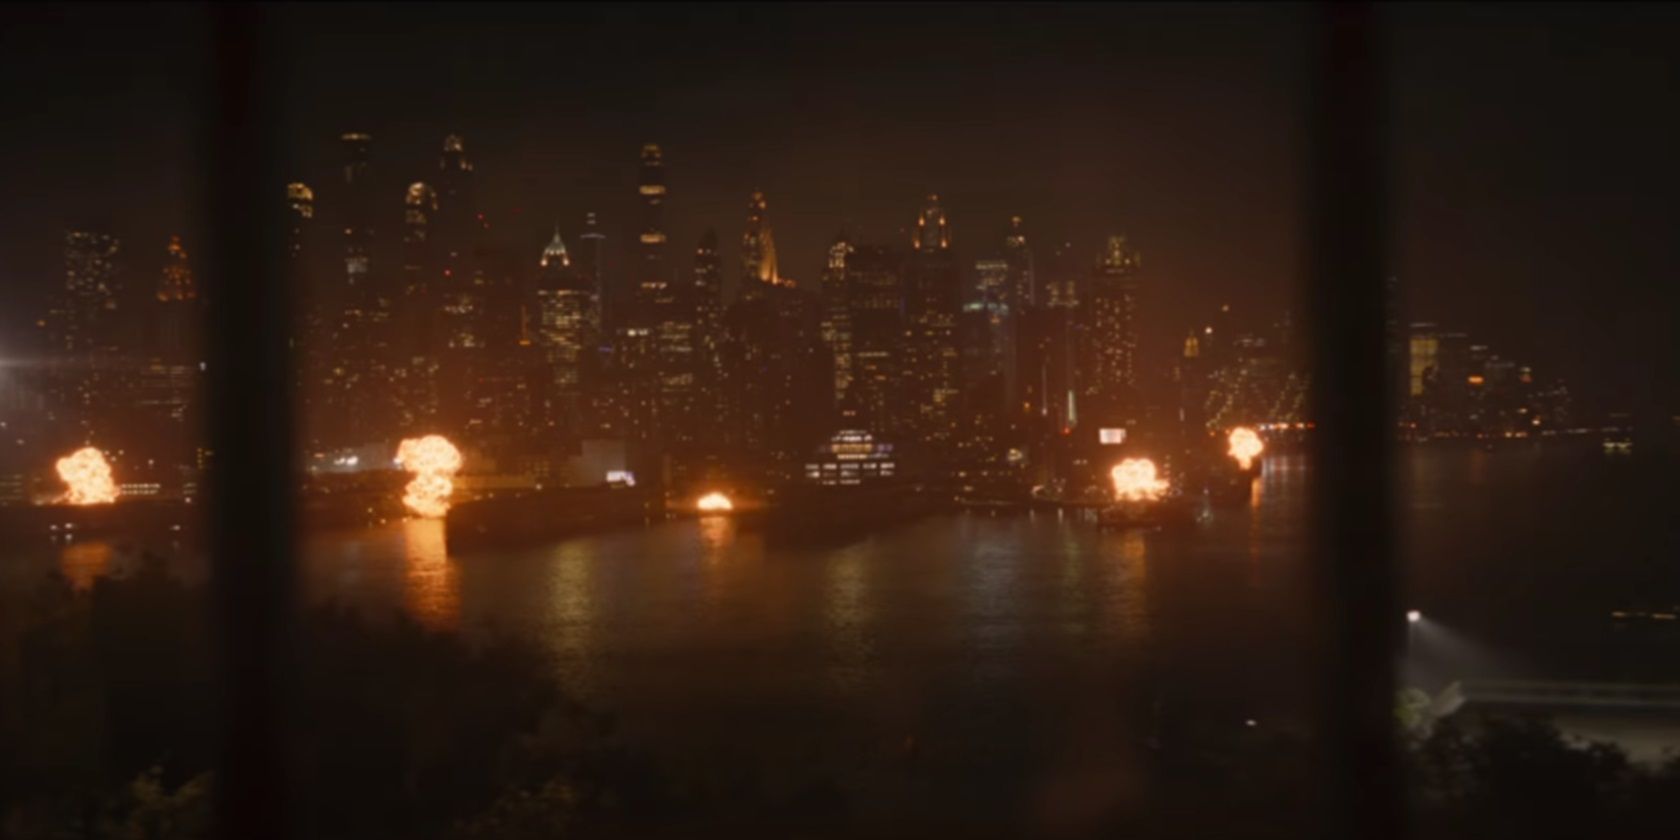 The Riddler's bombs go off around Gotham in The Batman